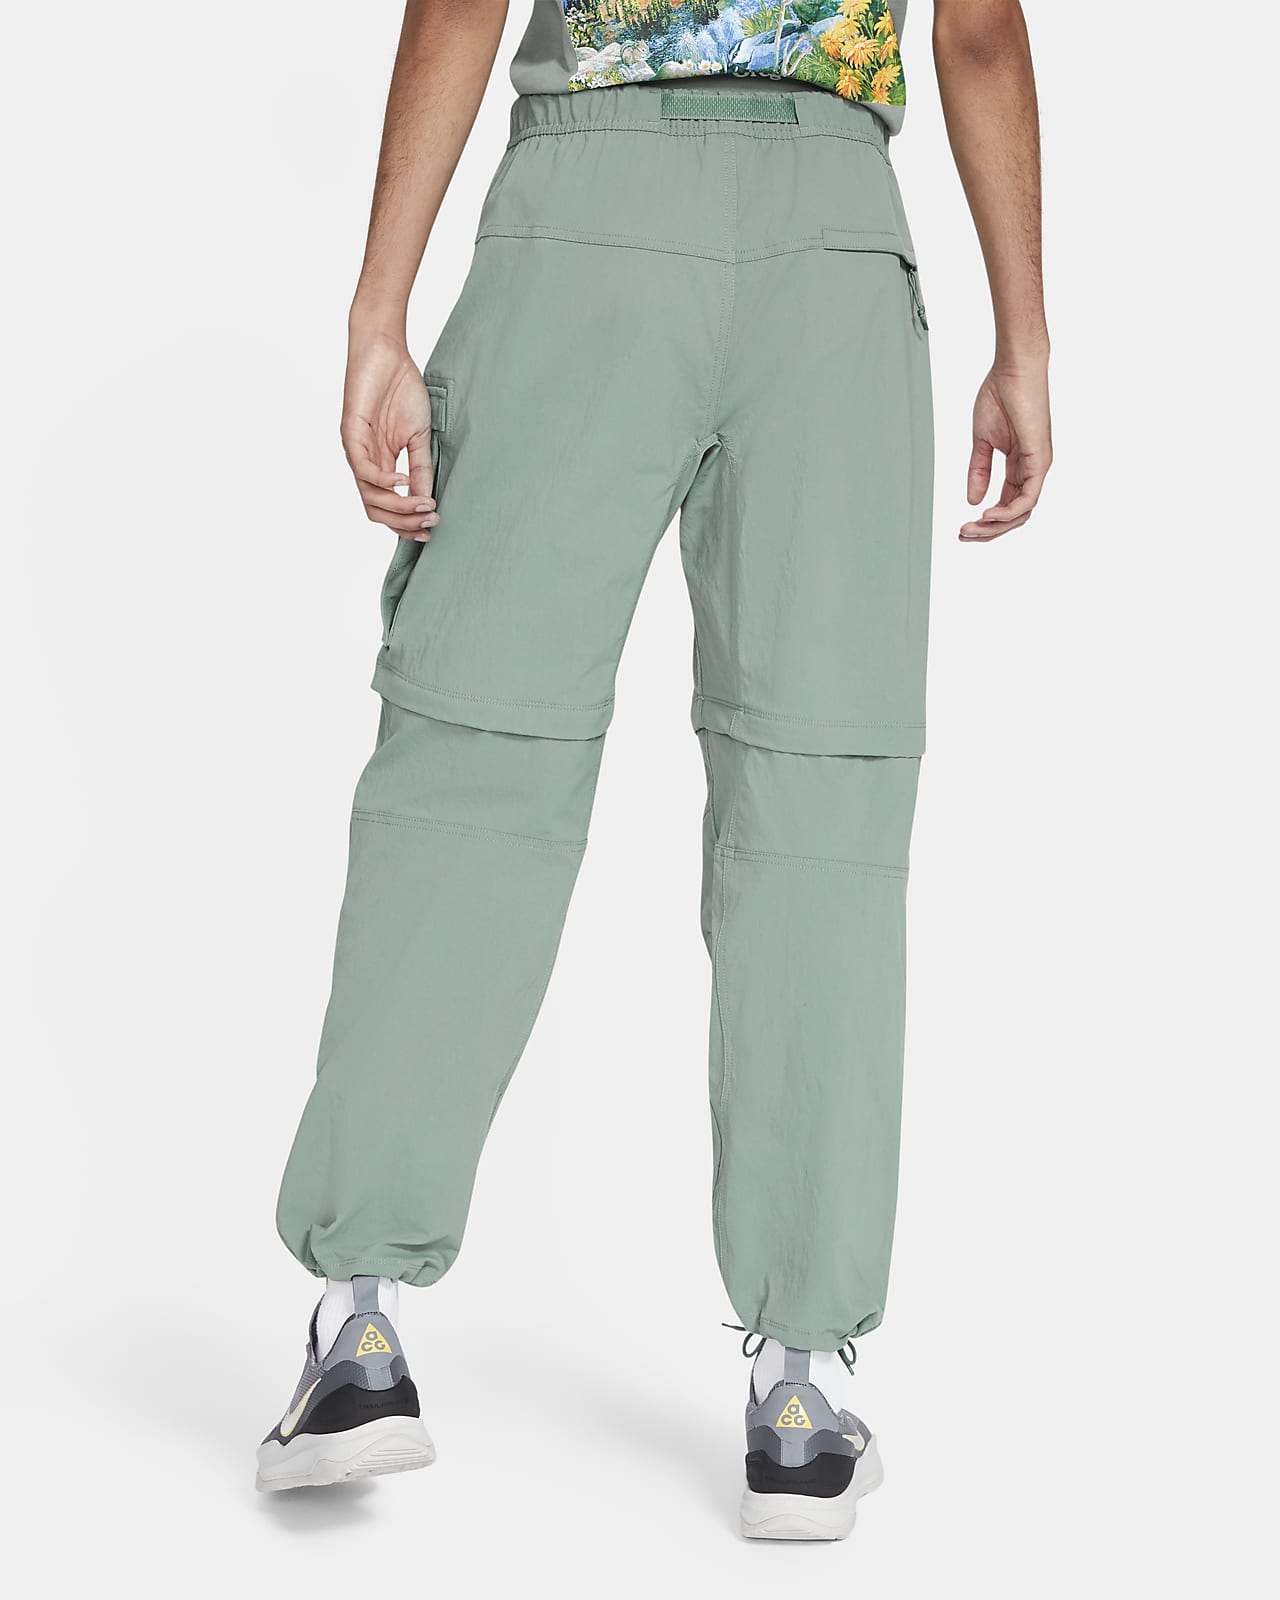 green nike cargo pants